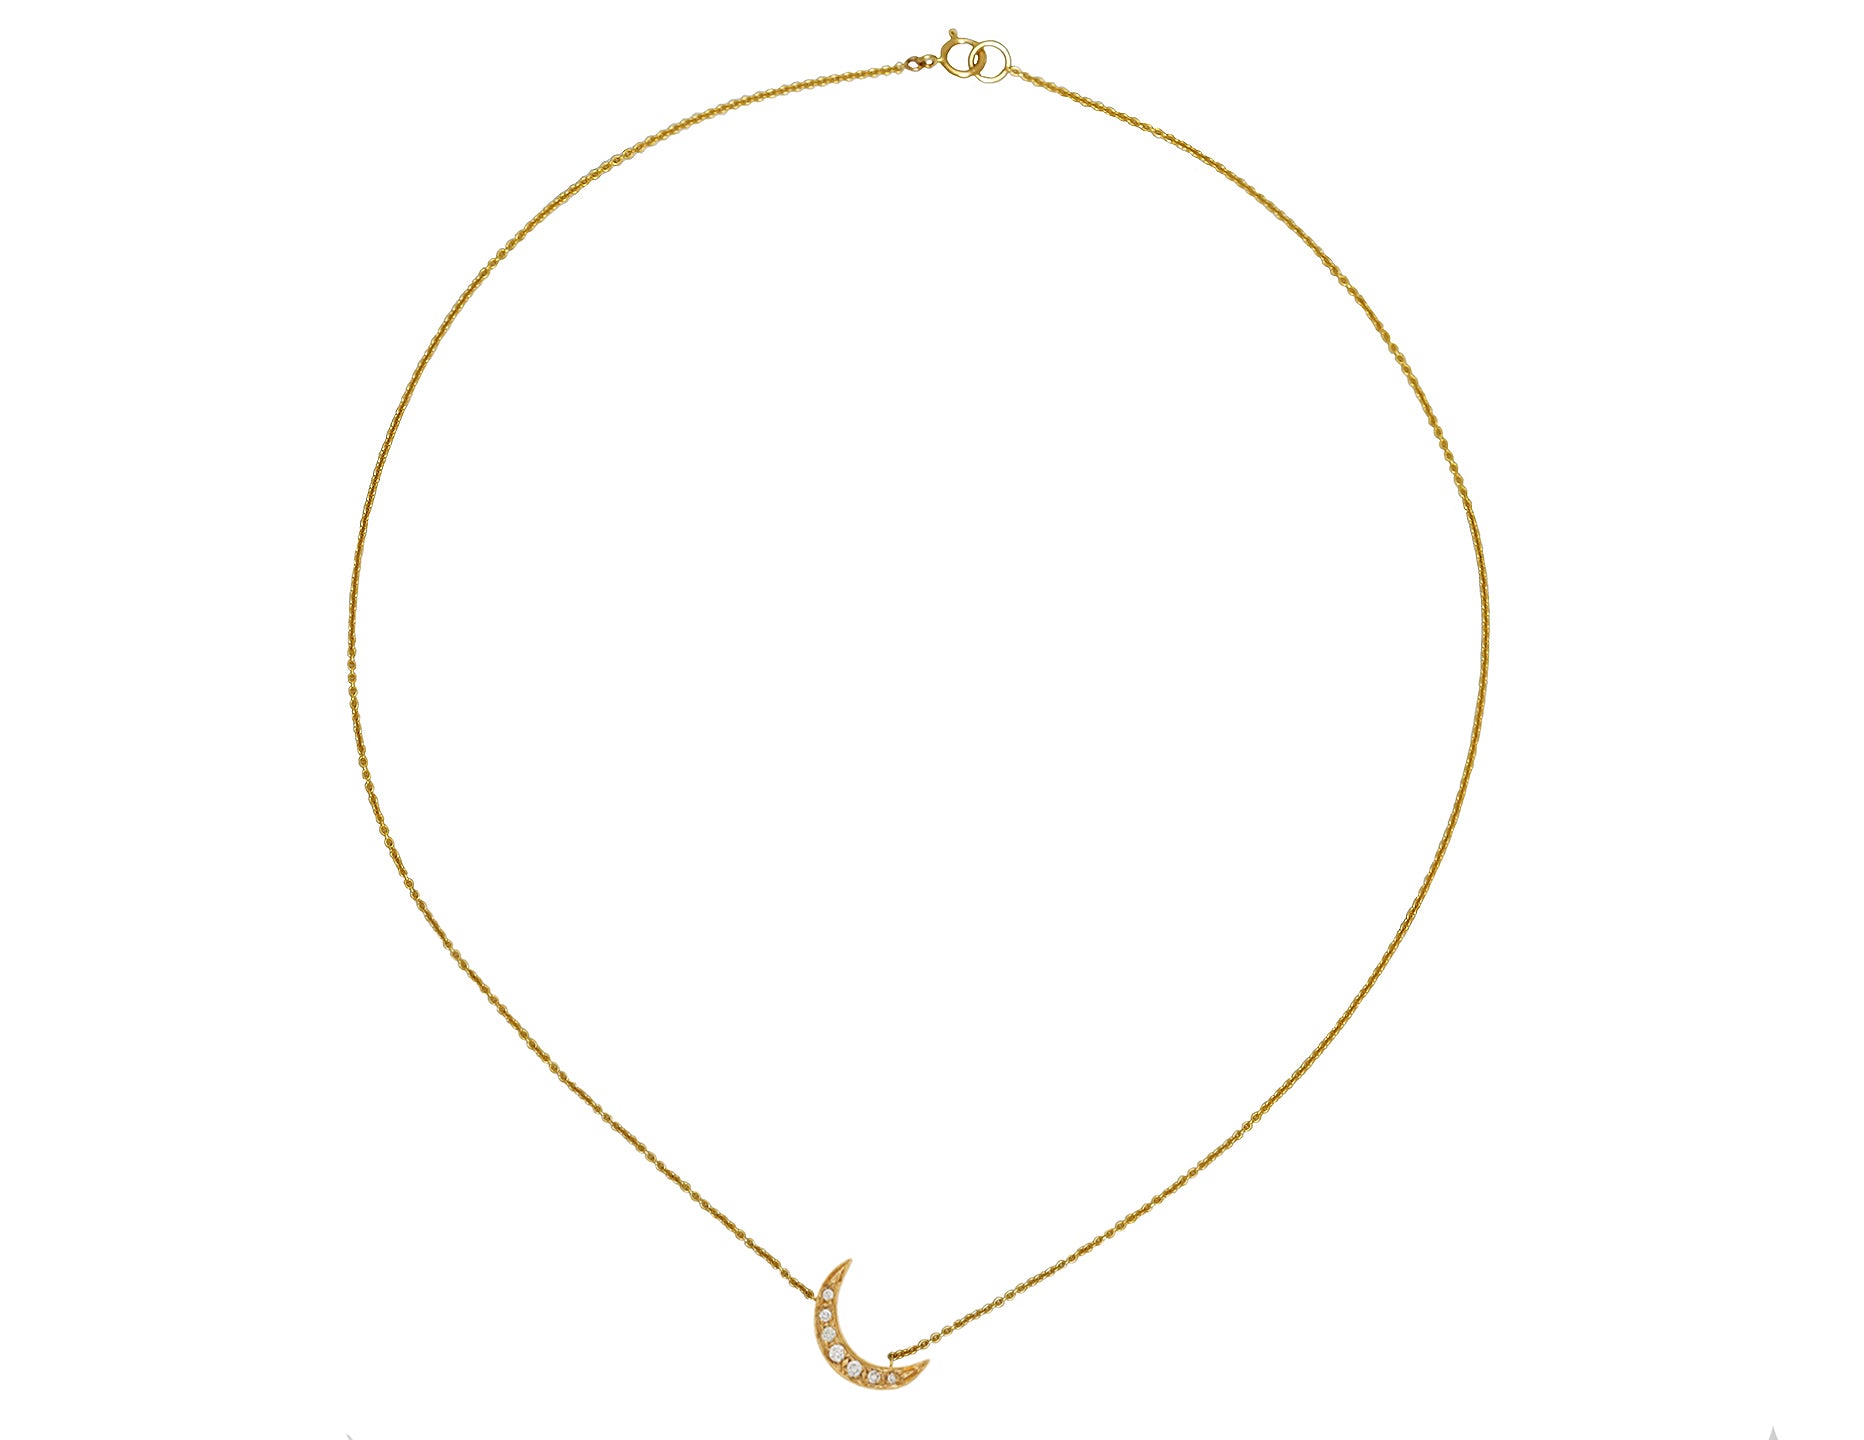 Diamond Crescent Moon & Gold Necklace